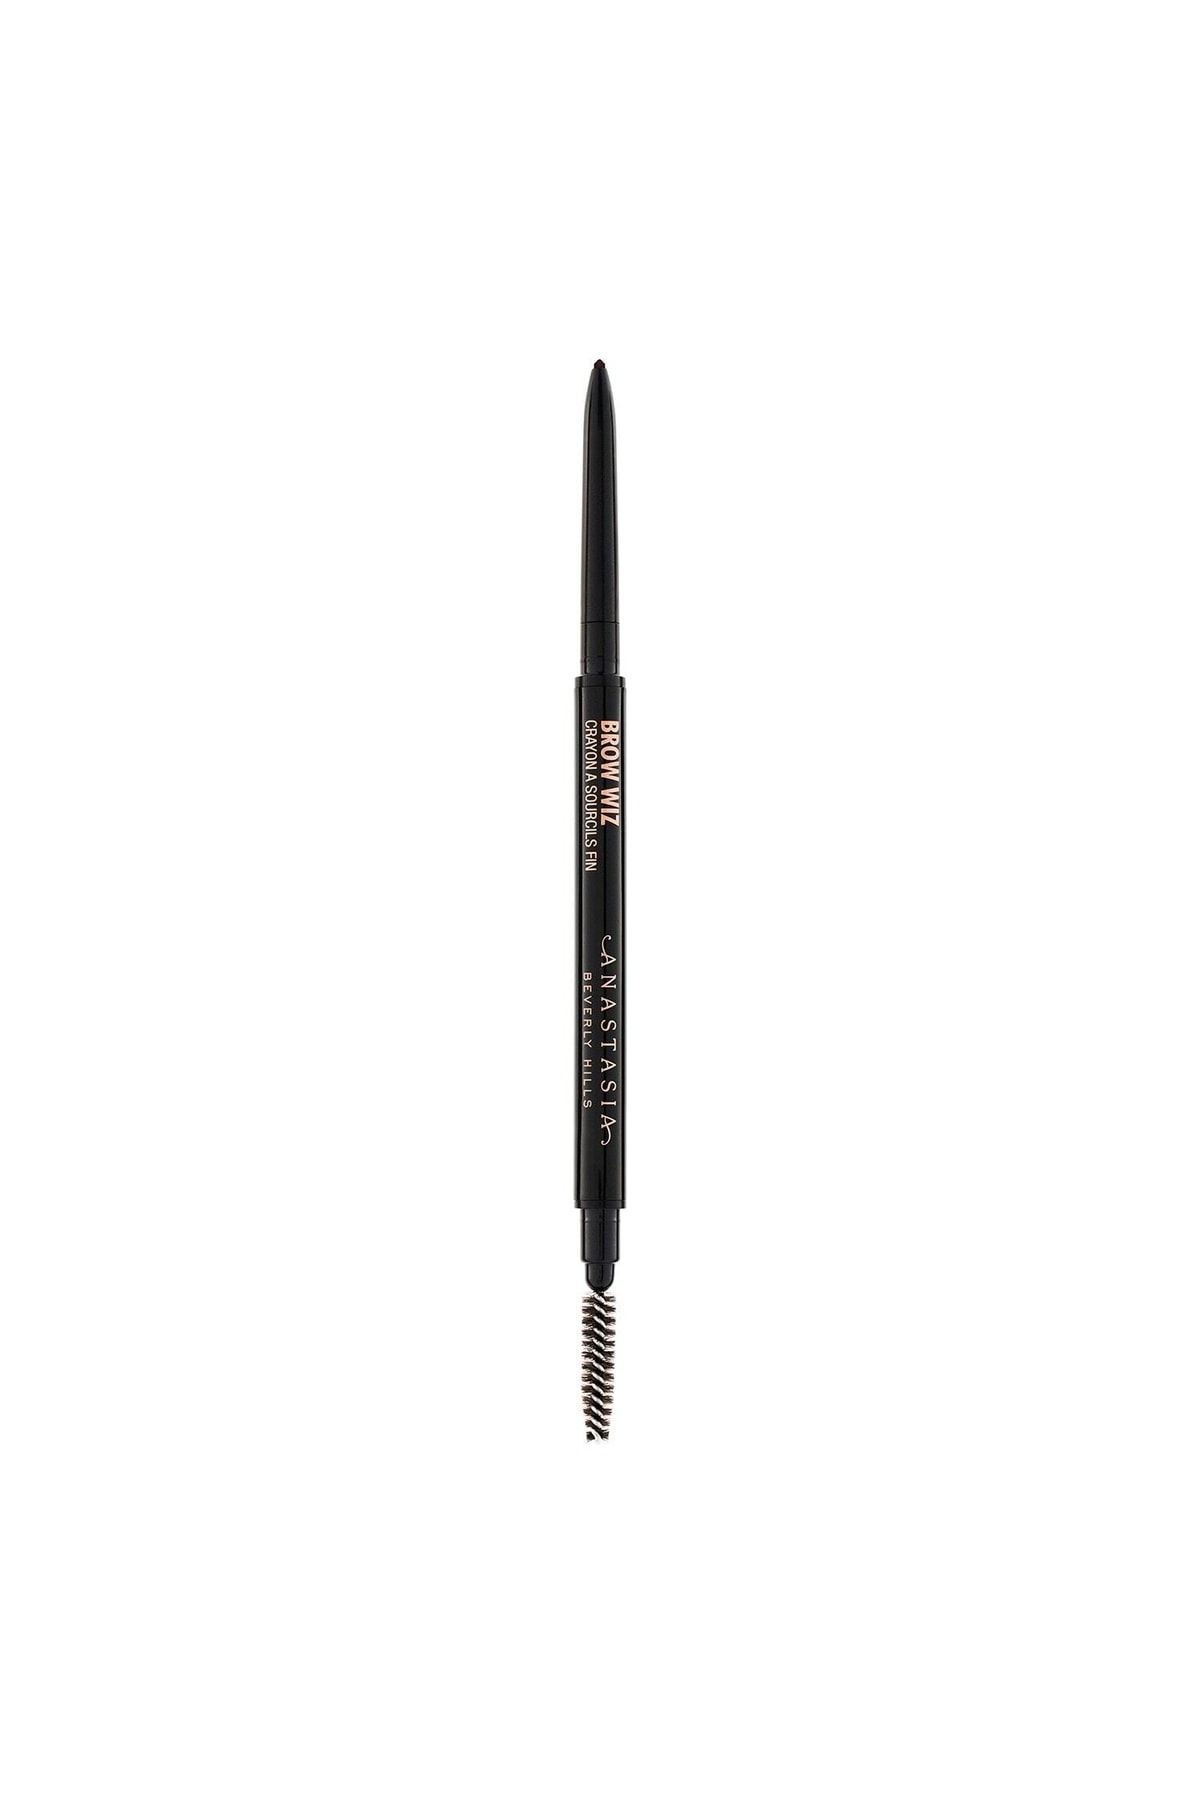 Anastasia Beverly Hills Brow Wiz Definer Full Details Ultra Slim Eyebrow Pencil Medium Brown